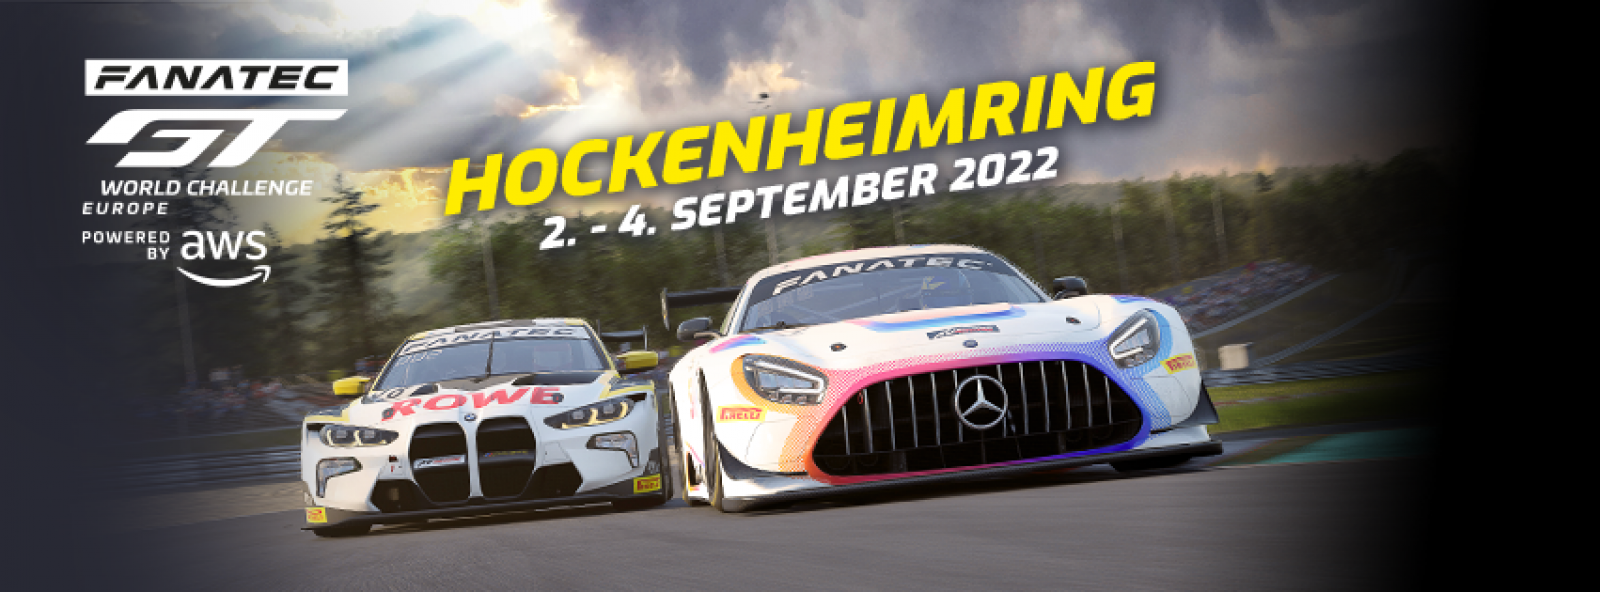 Fanatec GT World Challenge Europe Powered AWS kicks off decisive phase of 2022 season with maiden visit to Hockenheim